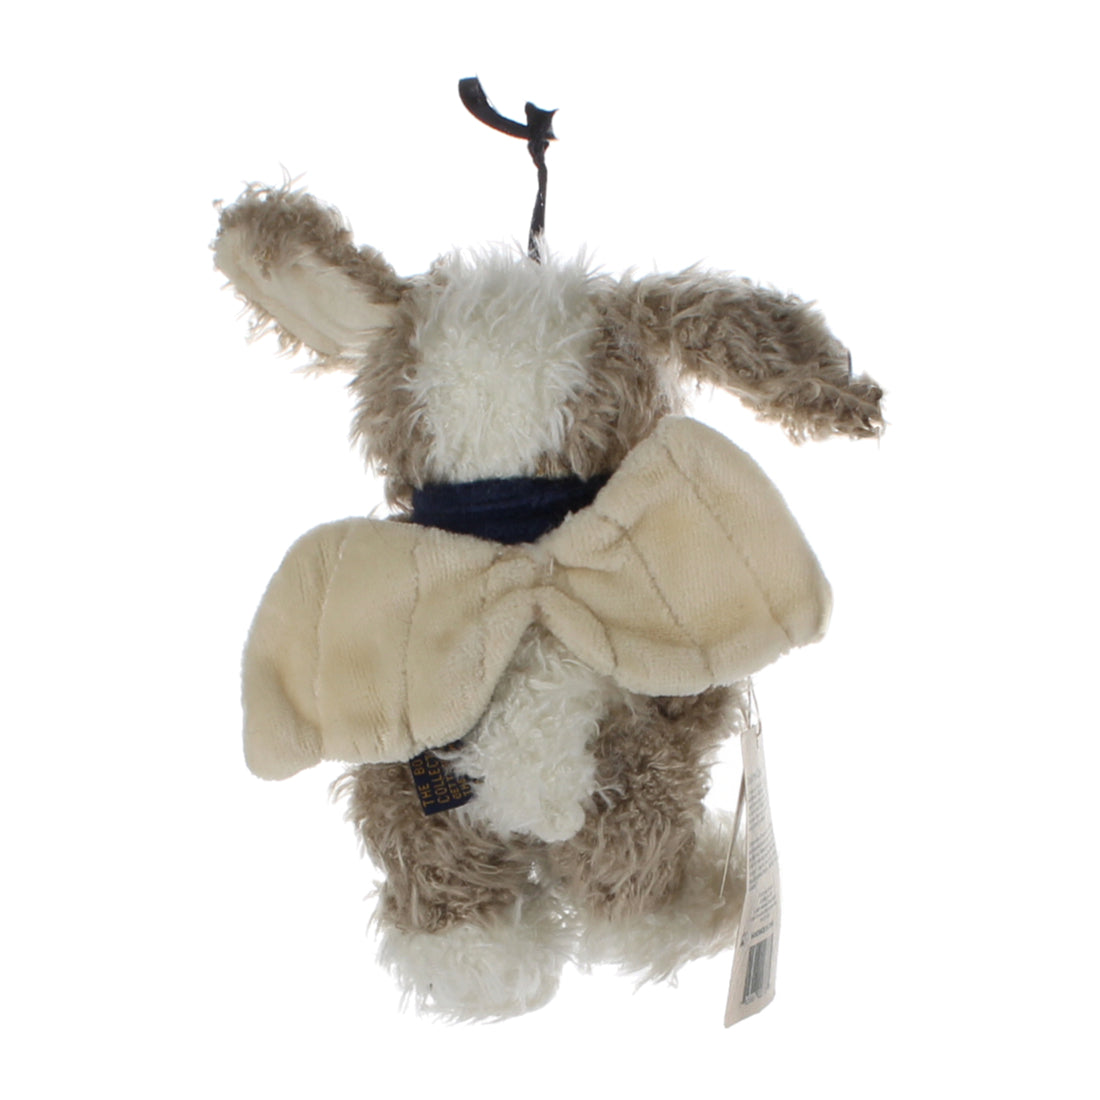 Boyds-Bears-&-Friends-Plush-Bear-Brown-White-winged-"Joy"-dog-navy-scarf-ornament